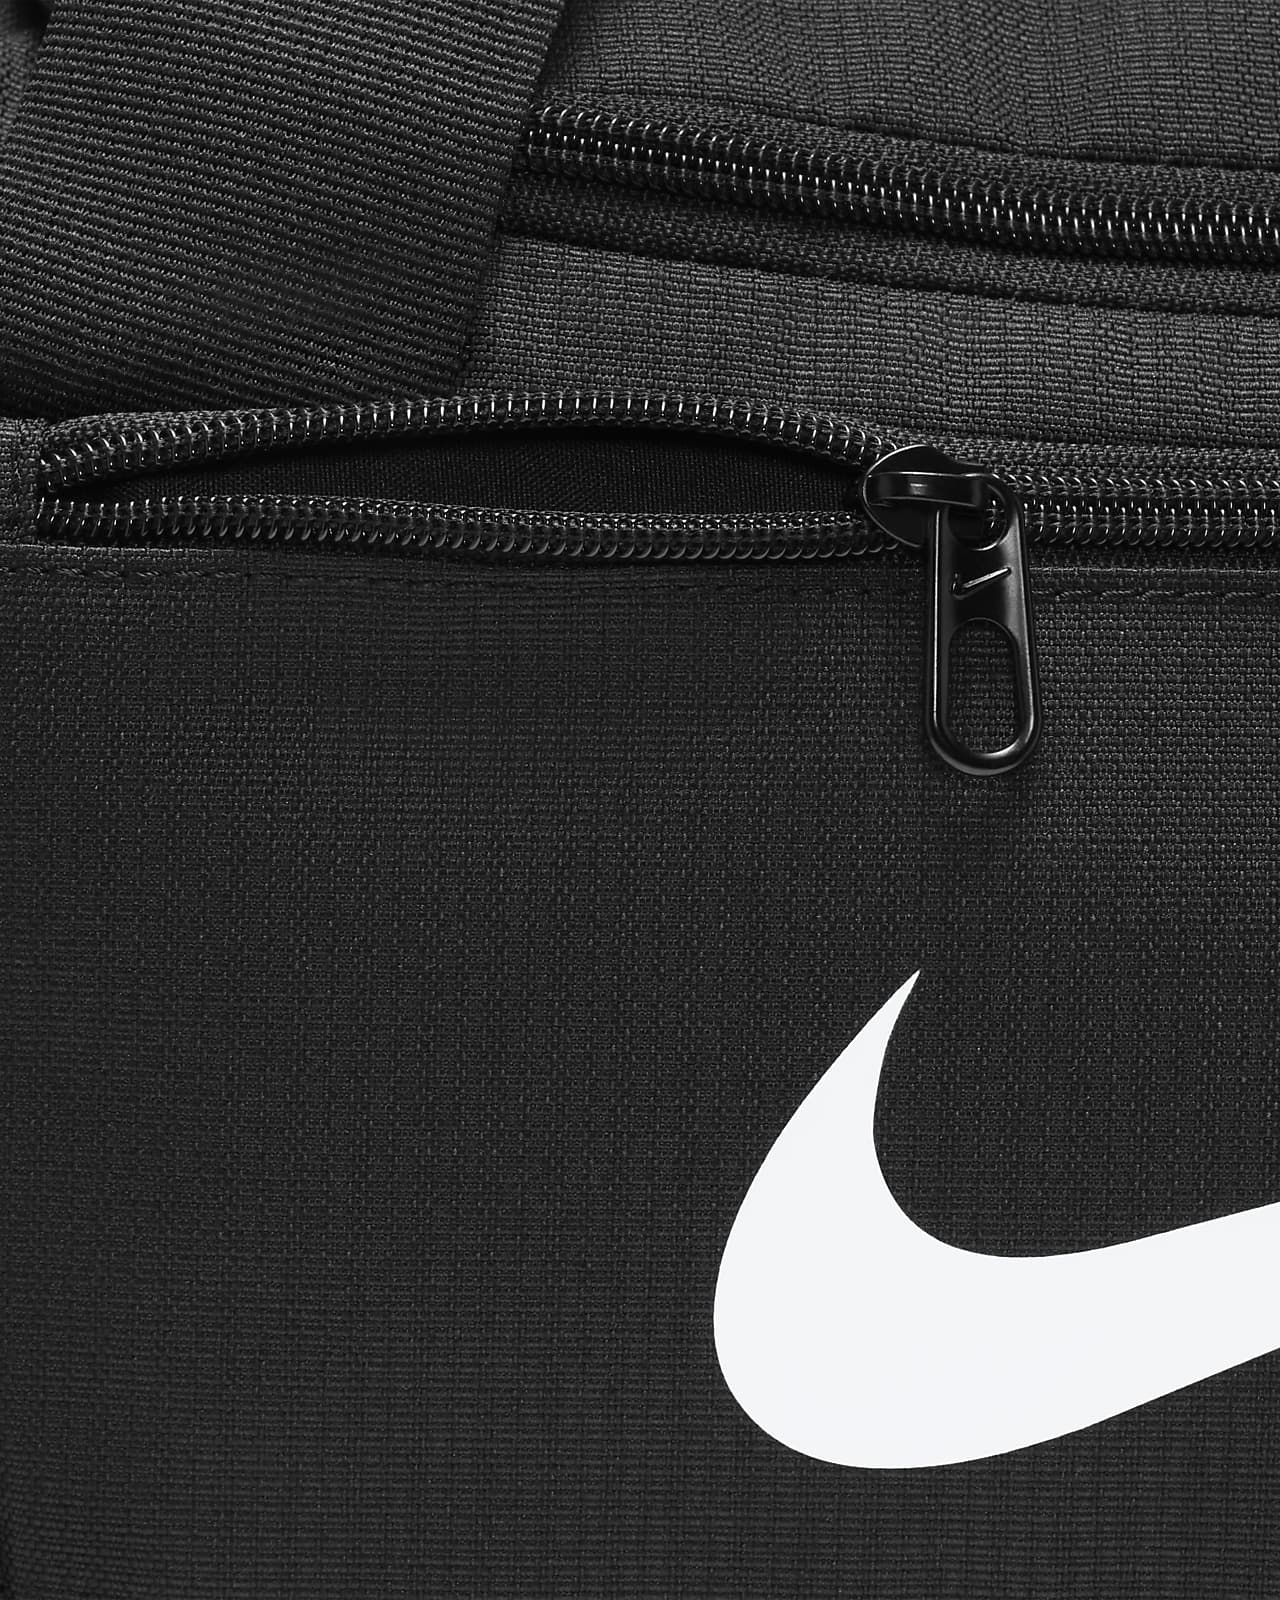 Nike Brasilia 9.5 Duffel Bag (Extra-Small, 25L). Nike ID